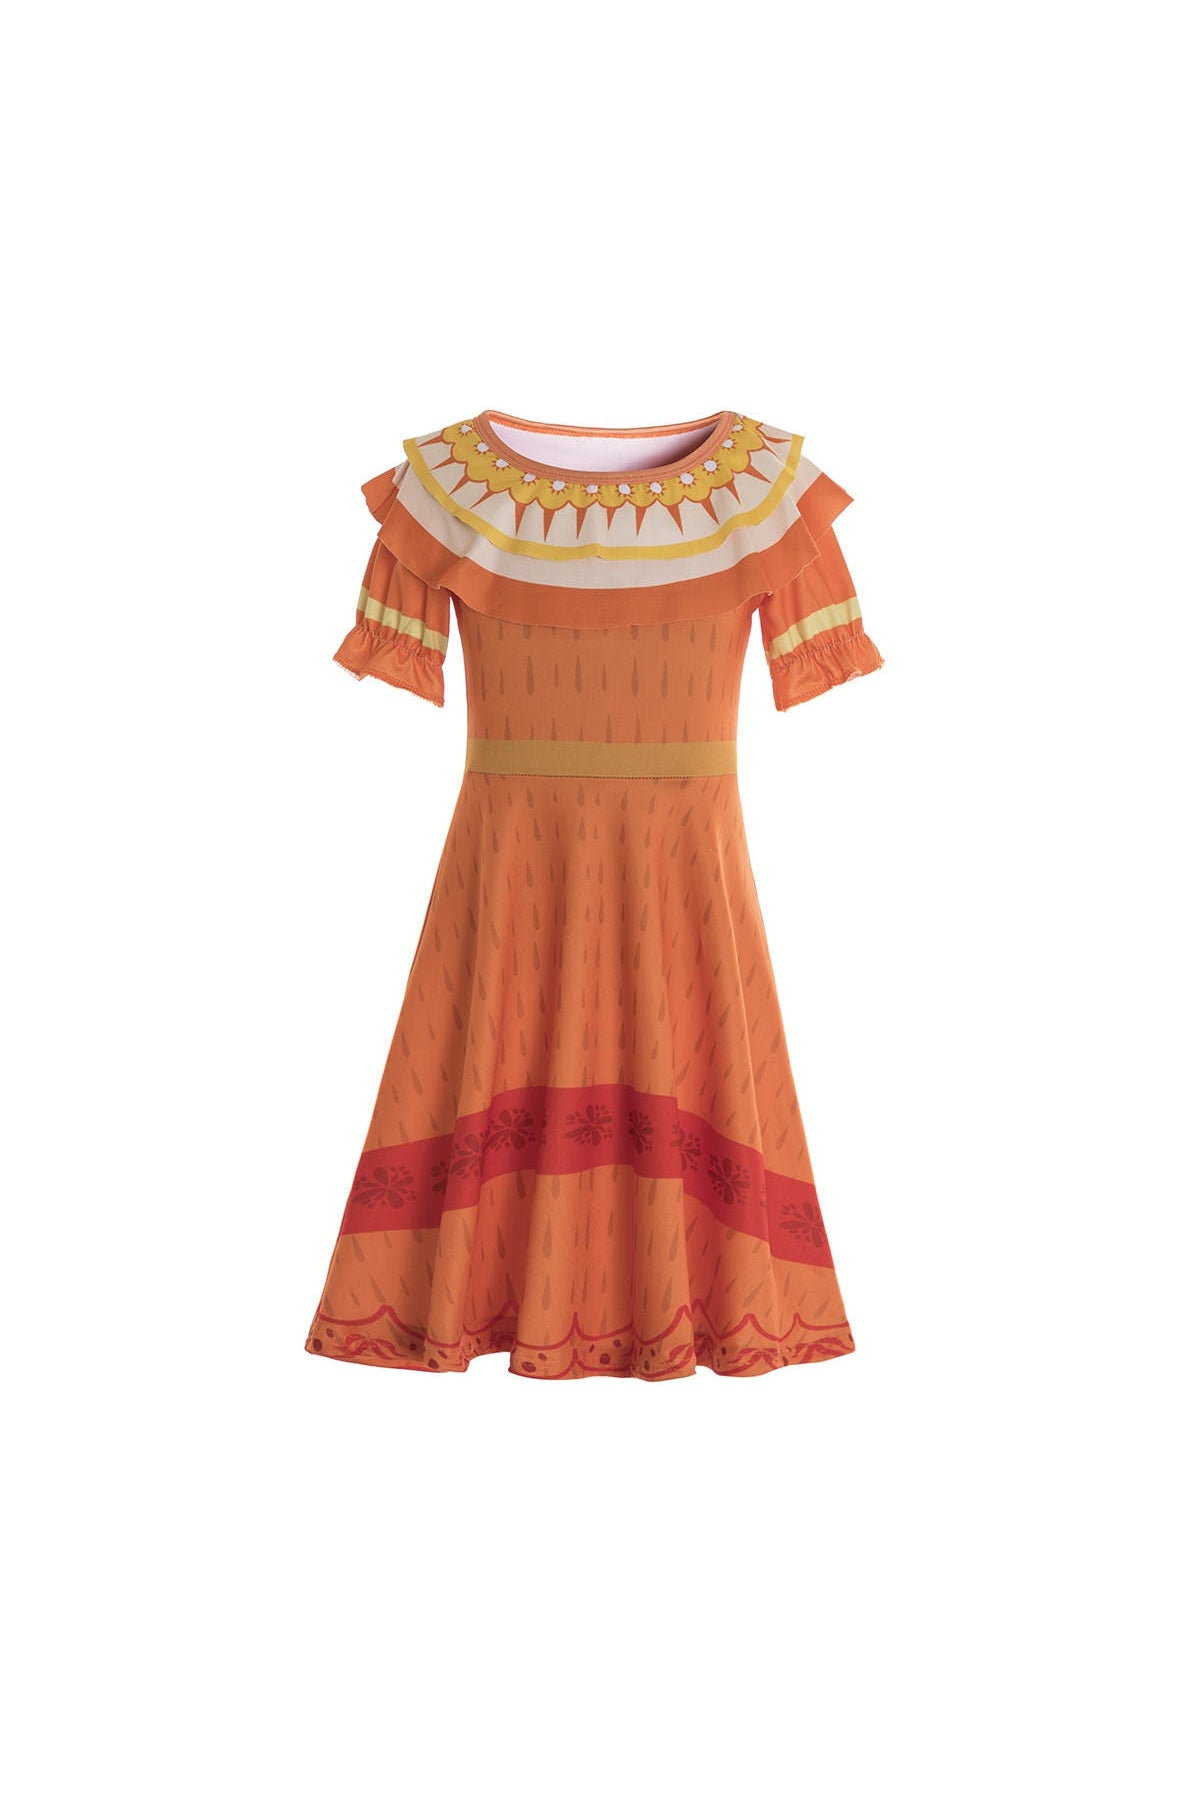 Beautiful Fancy dress inspired by the movie Encanto - Pepa